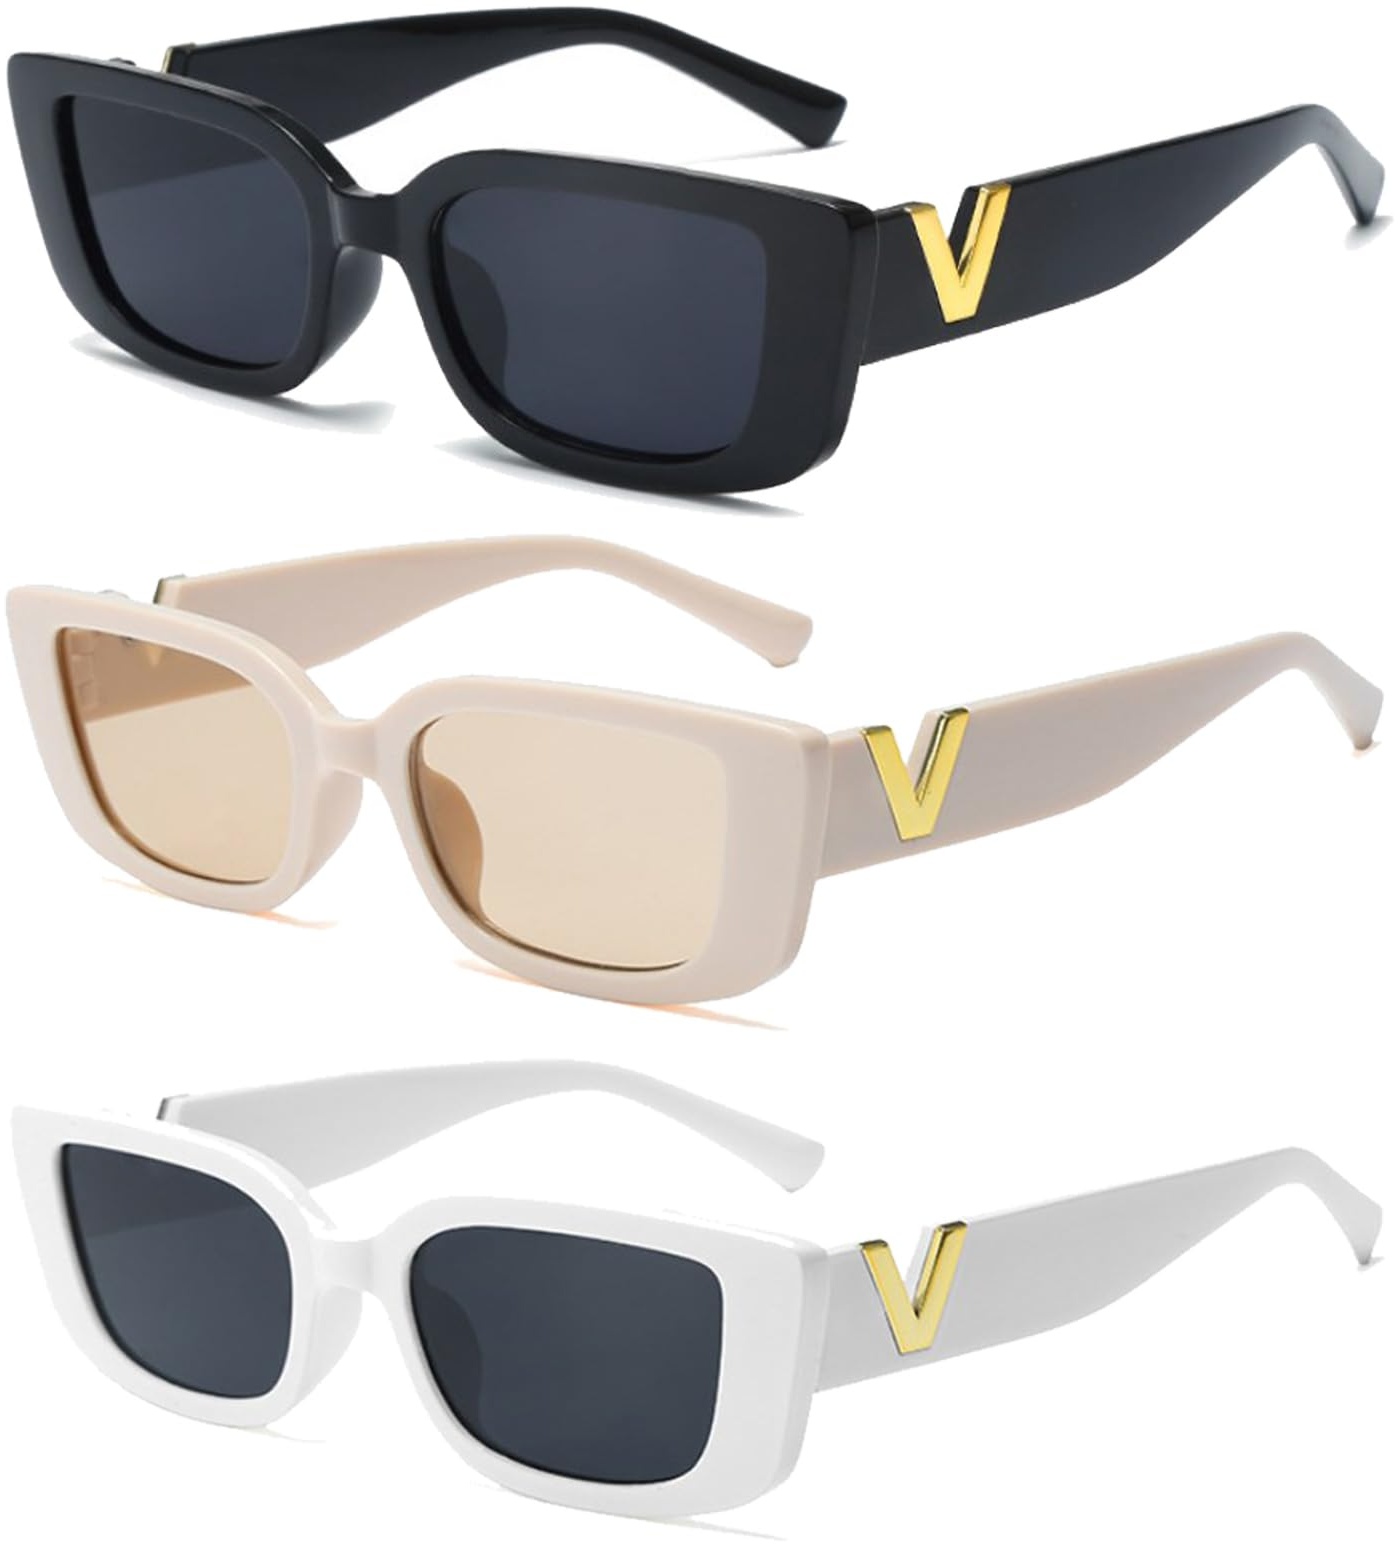 RAOLAWOBA 3 Stück Trendige Rechteckige Sonnenbrille Sunglasses Rechteckige 90er Vintage Sonnenbrillen Set Sonnenbrille Vintage Unregelmäßiges Damen 90er Retro Sonnenbrillen Set Für Damen Und Herren